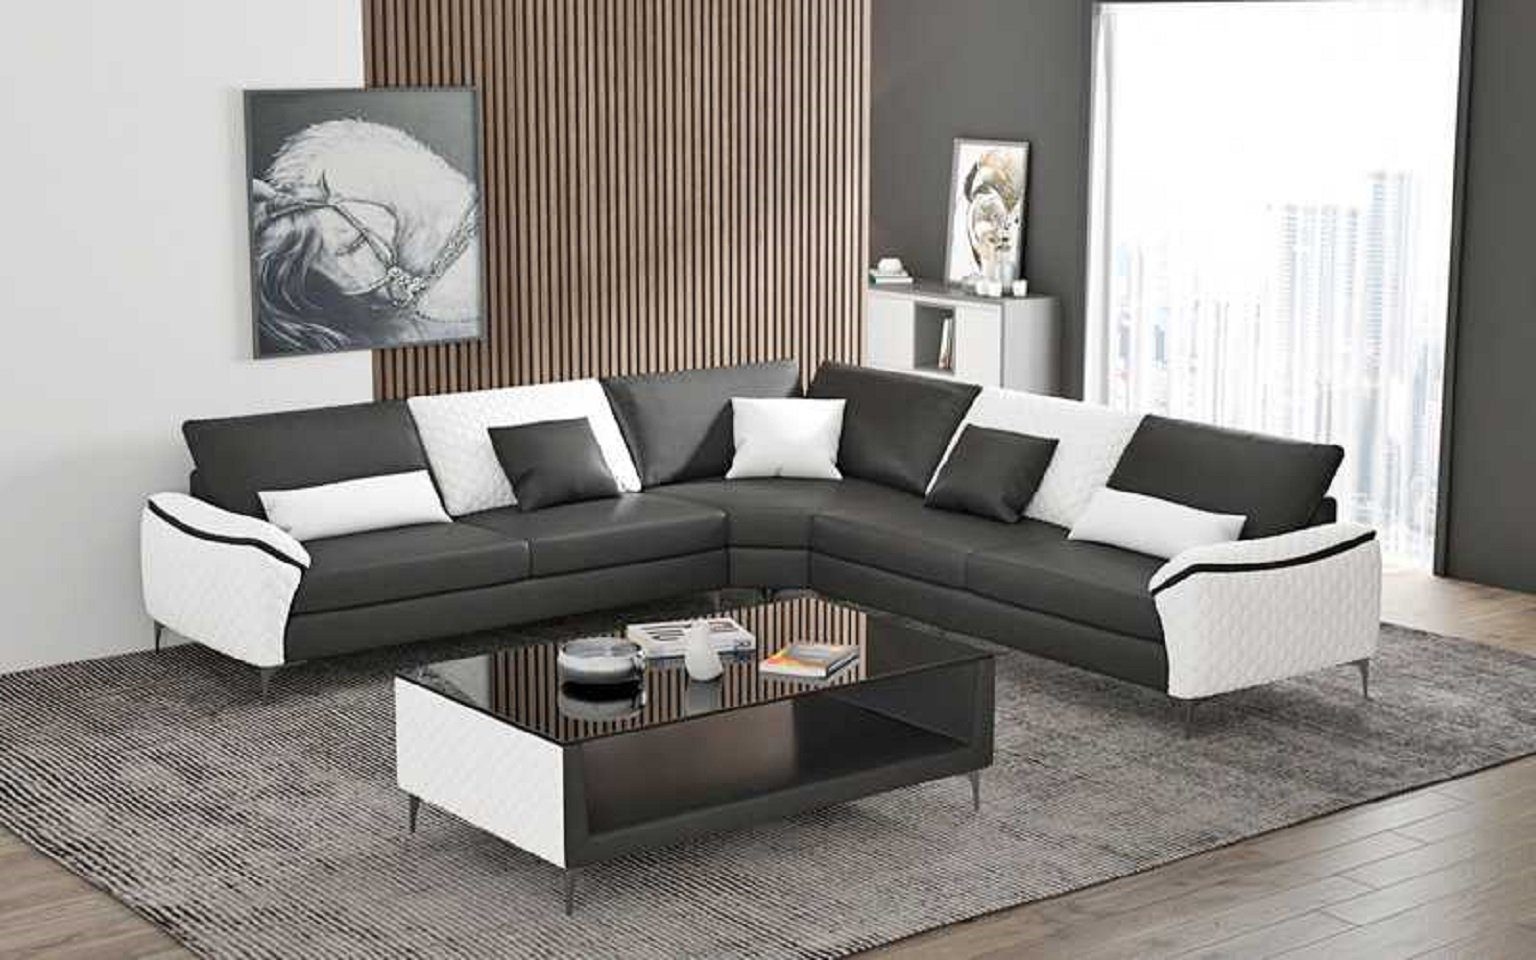 JVmoebel Ecksofa Luxus Eckgarnitur Couch Europe Ecksofa Luxus, Design Made Sofa in Schwarz 3 L Form Teile